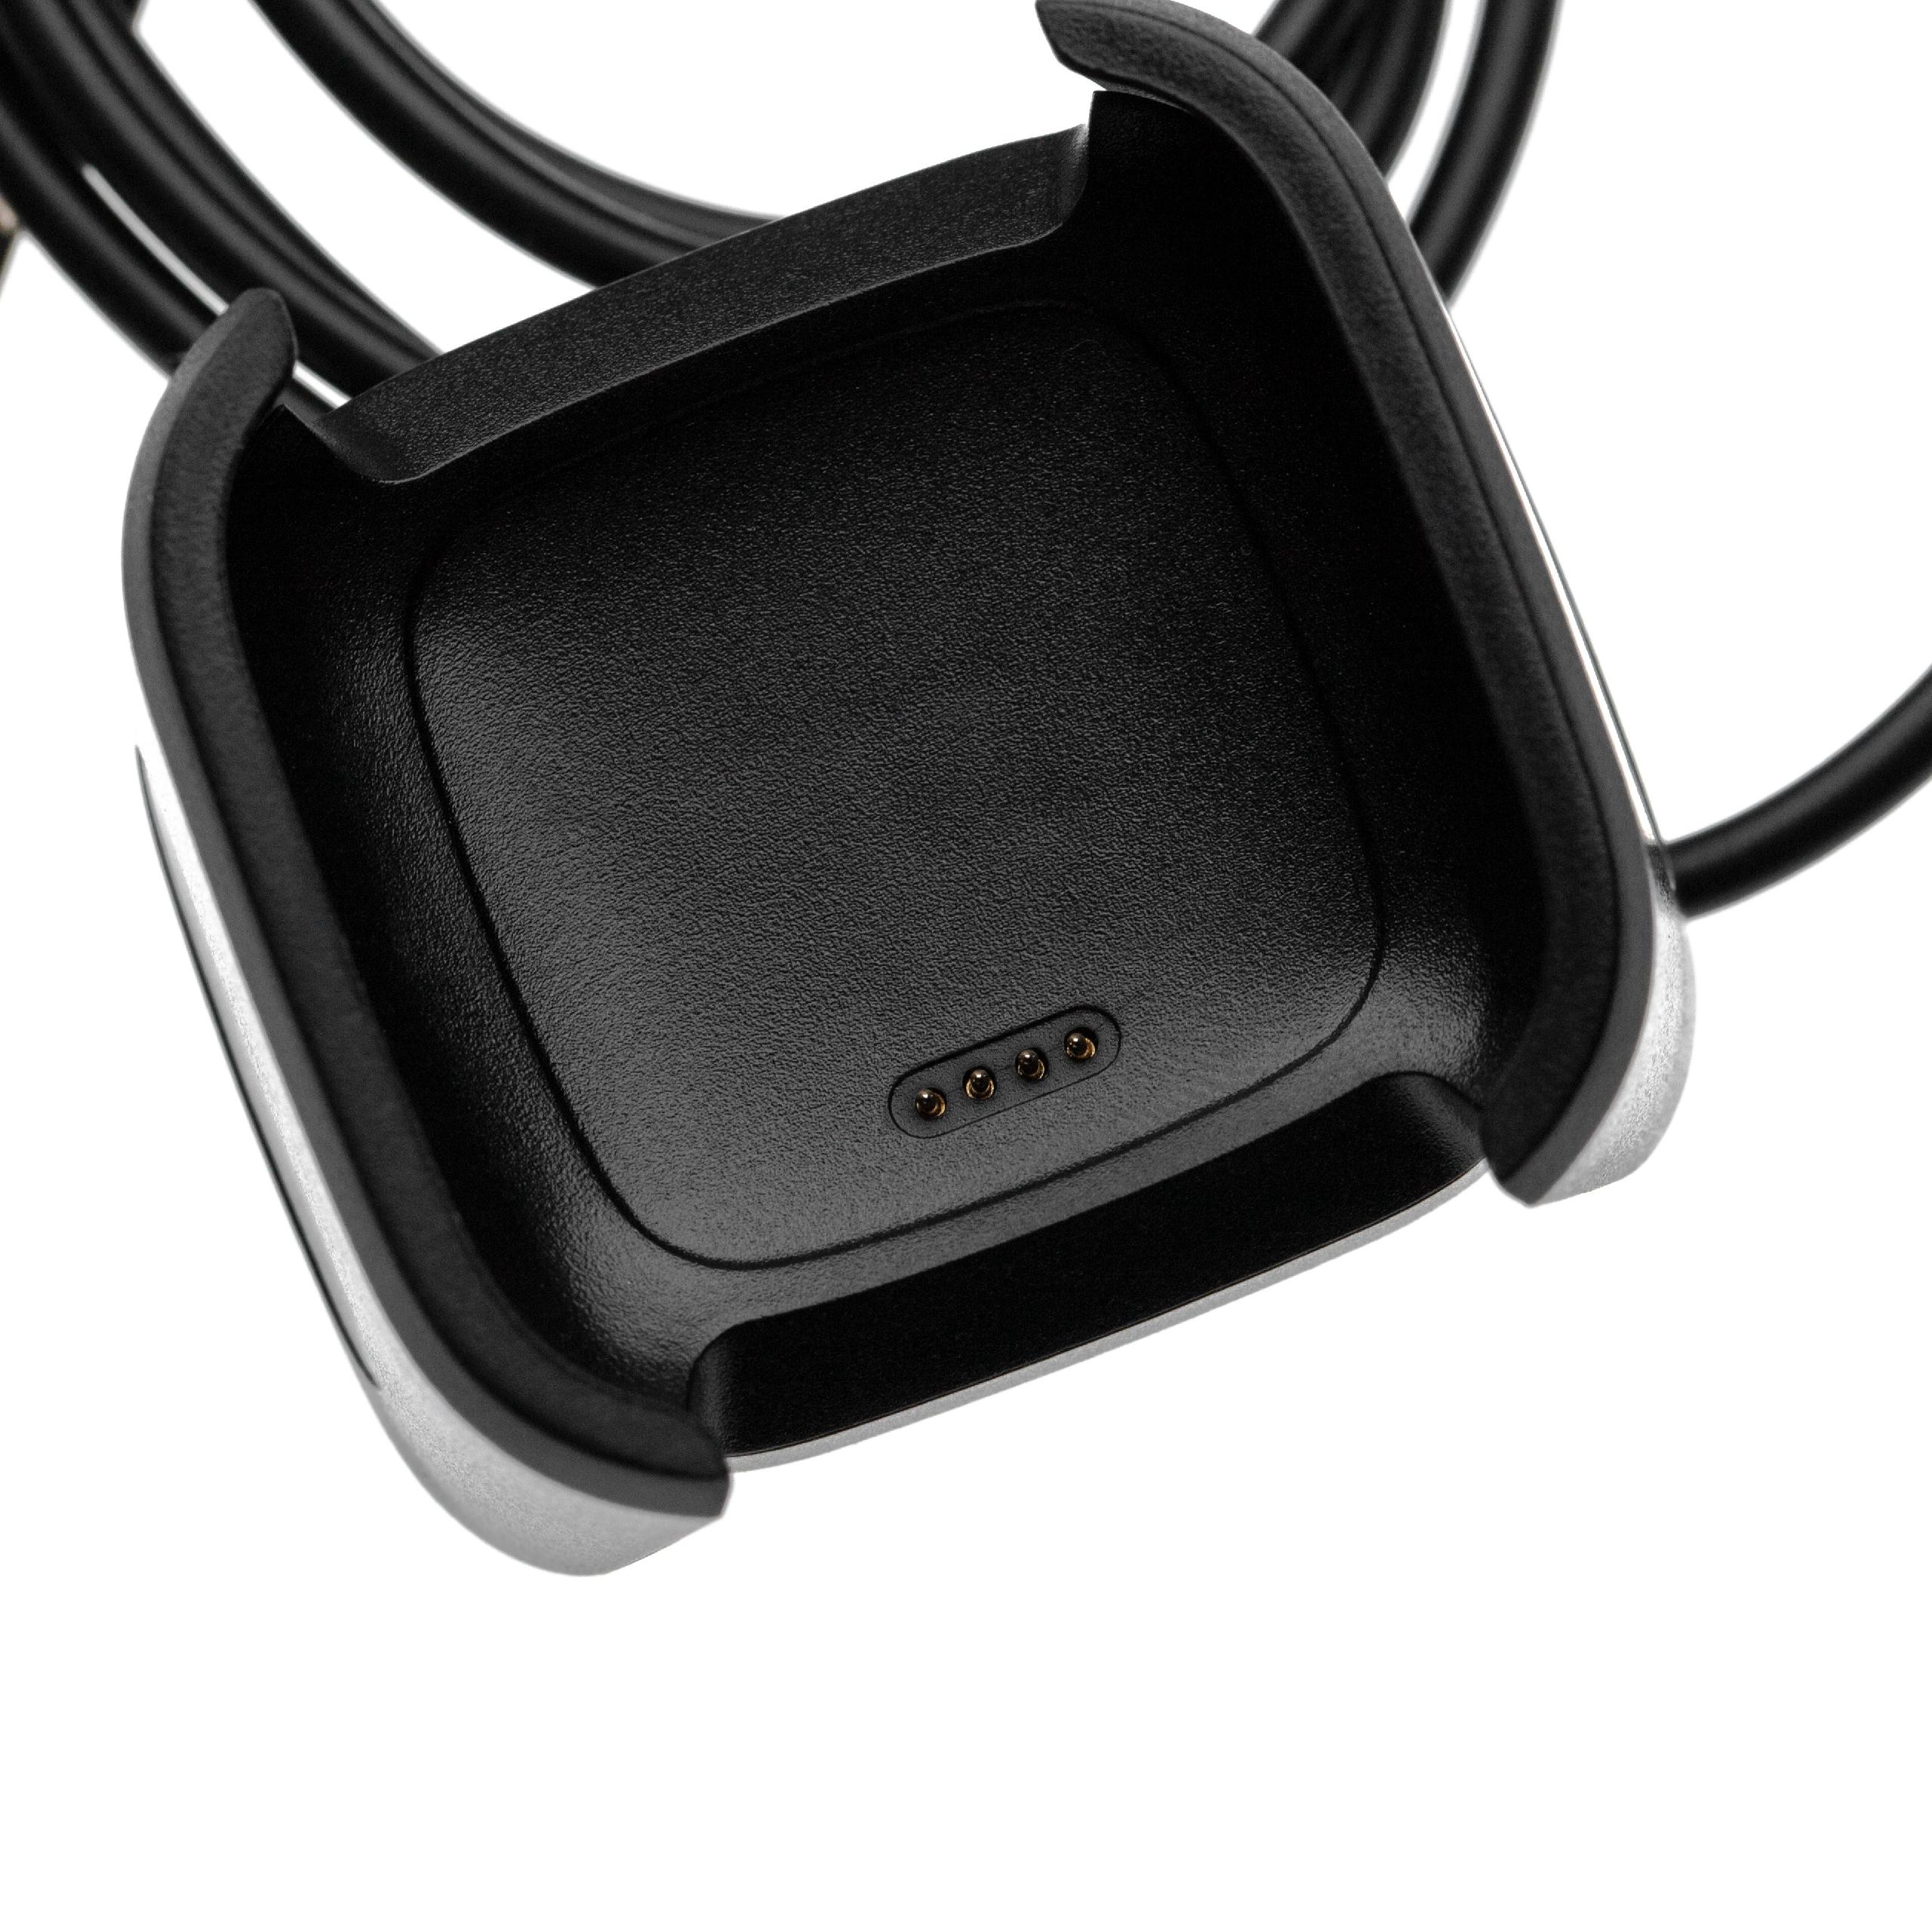 Cable de carga USB para smartwatch Fitbit Versa, Versa 2, Versa Lite - negro 100 cm